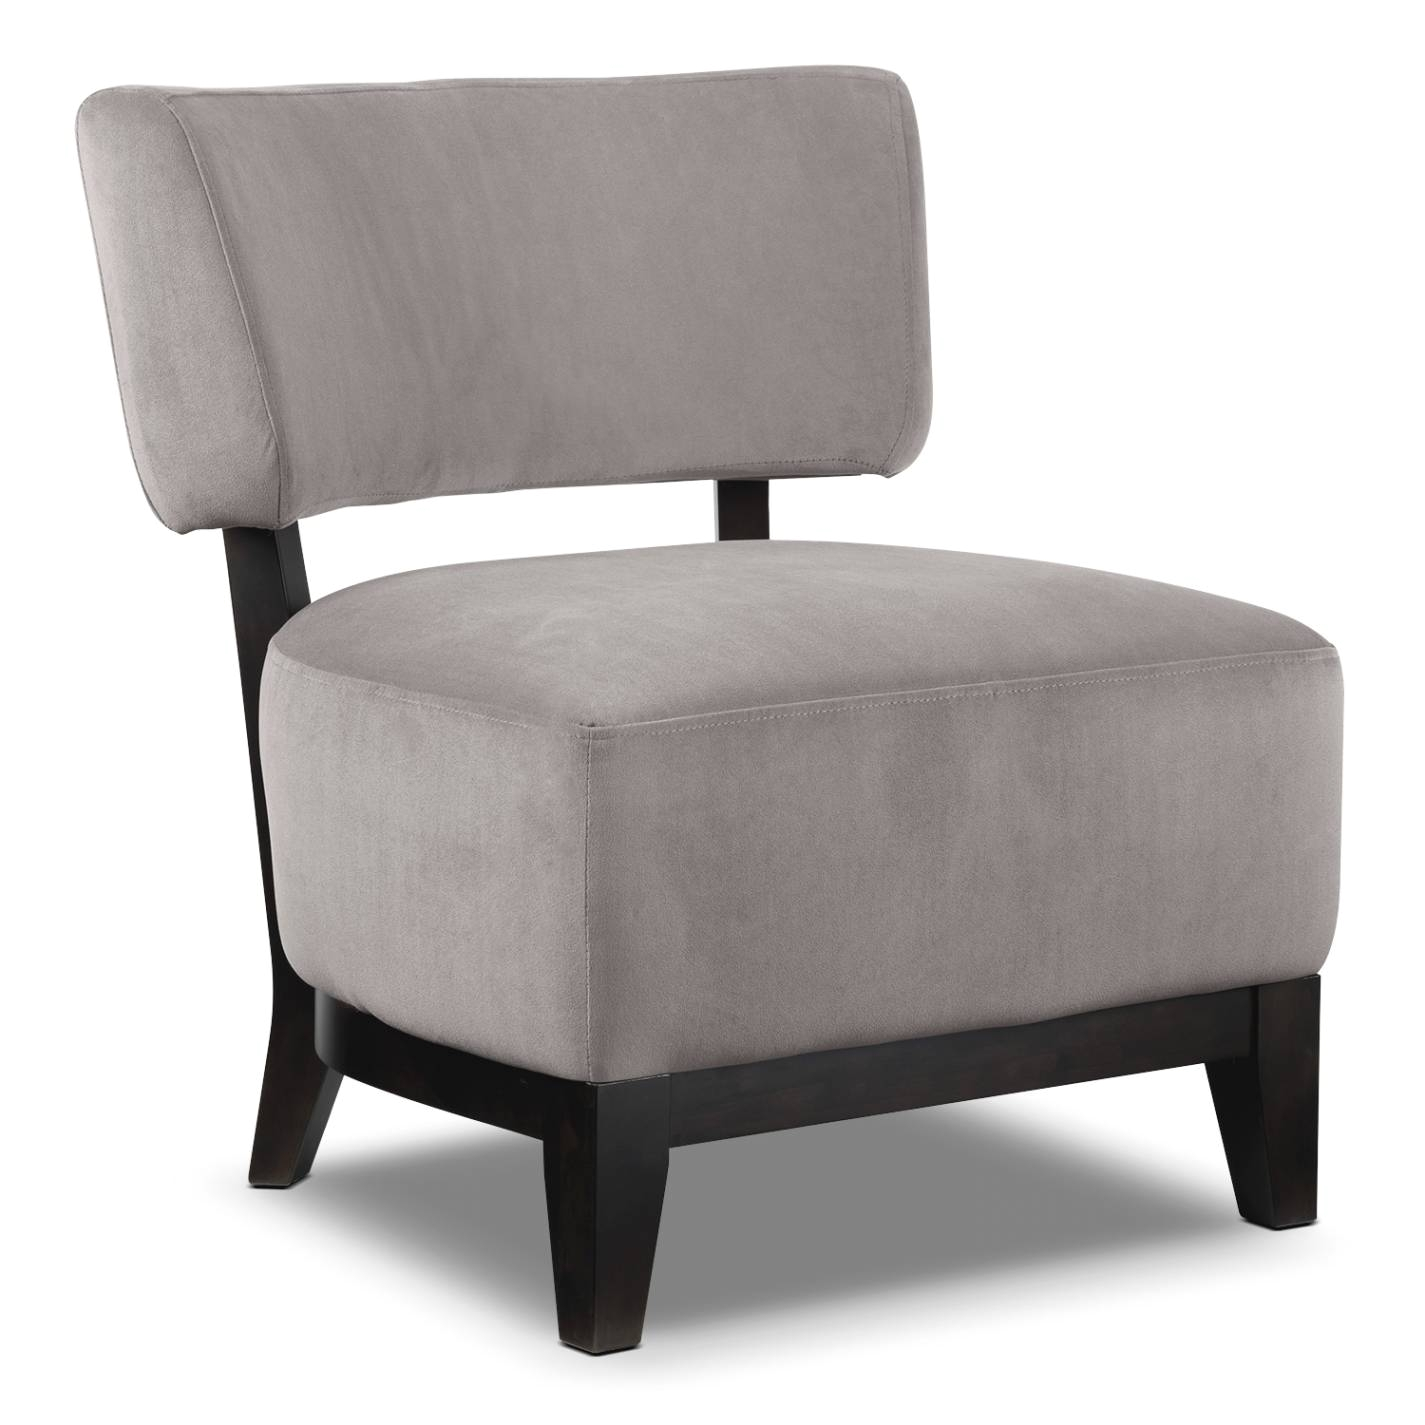 modern greyaccent chair with ottoman